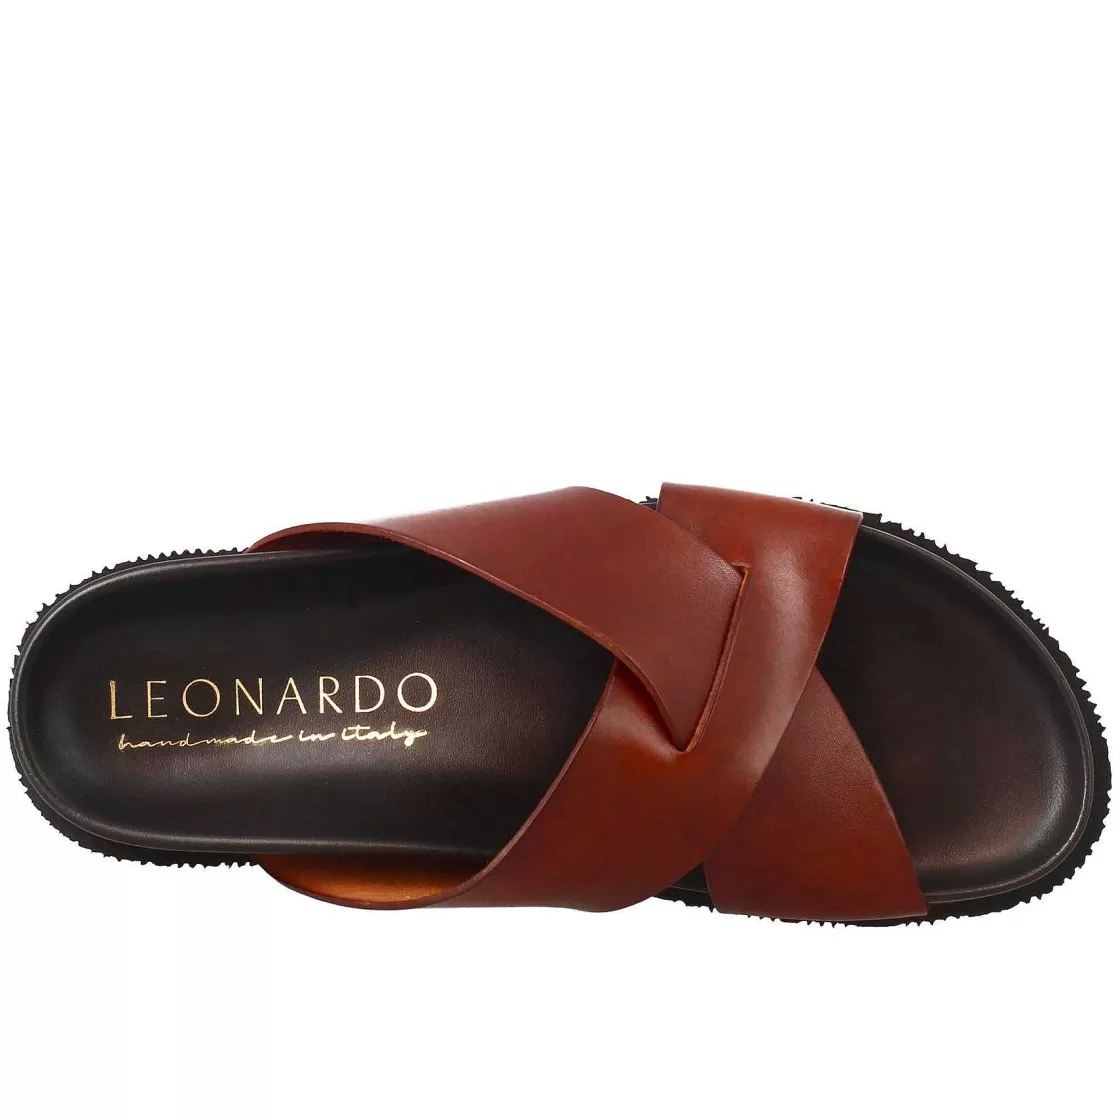 Leonardo Open Back Brown Leather Men'S Sandals Flash Sale